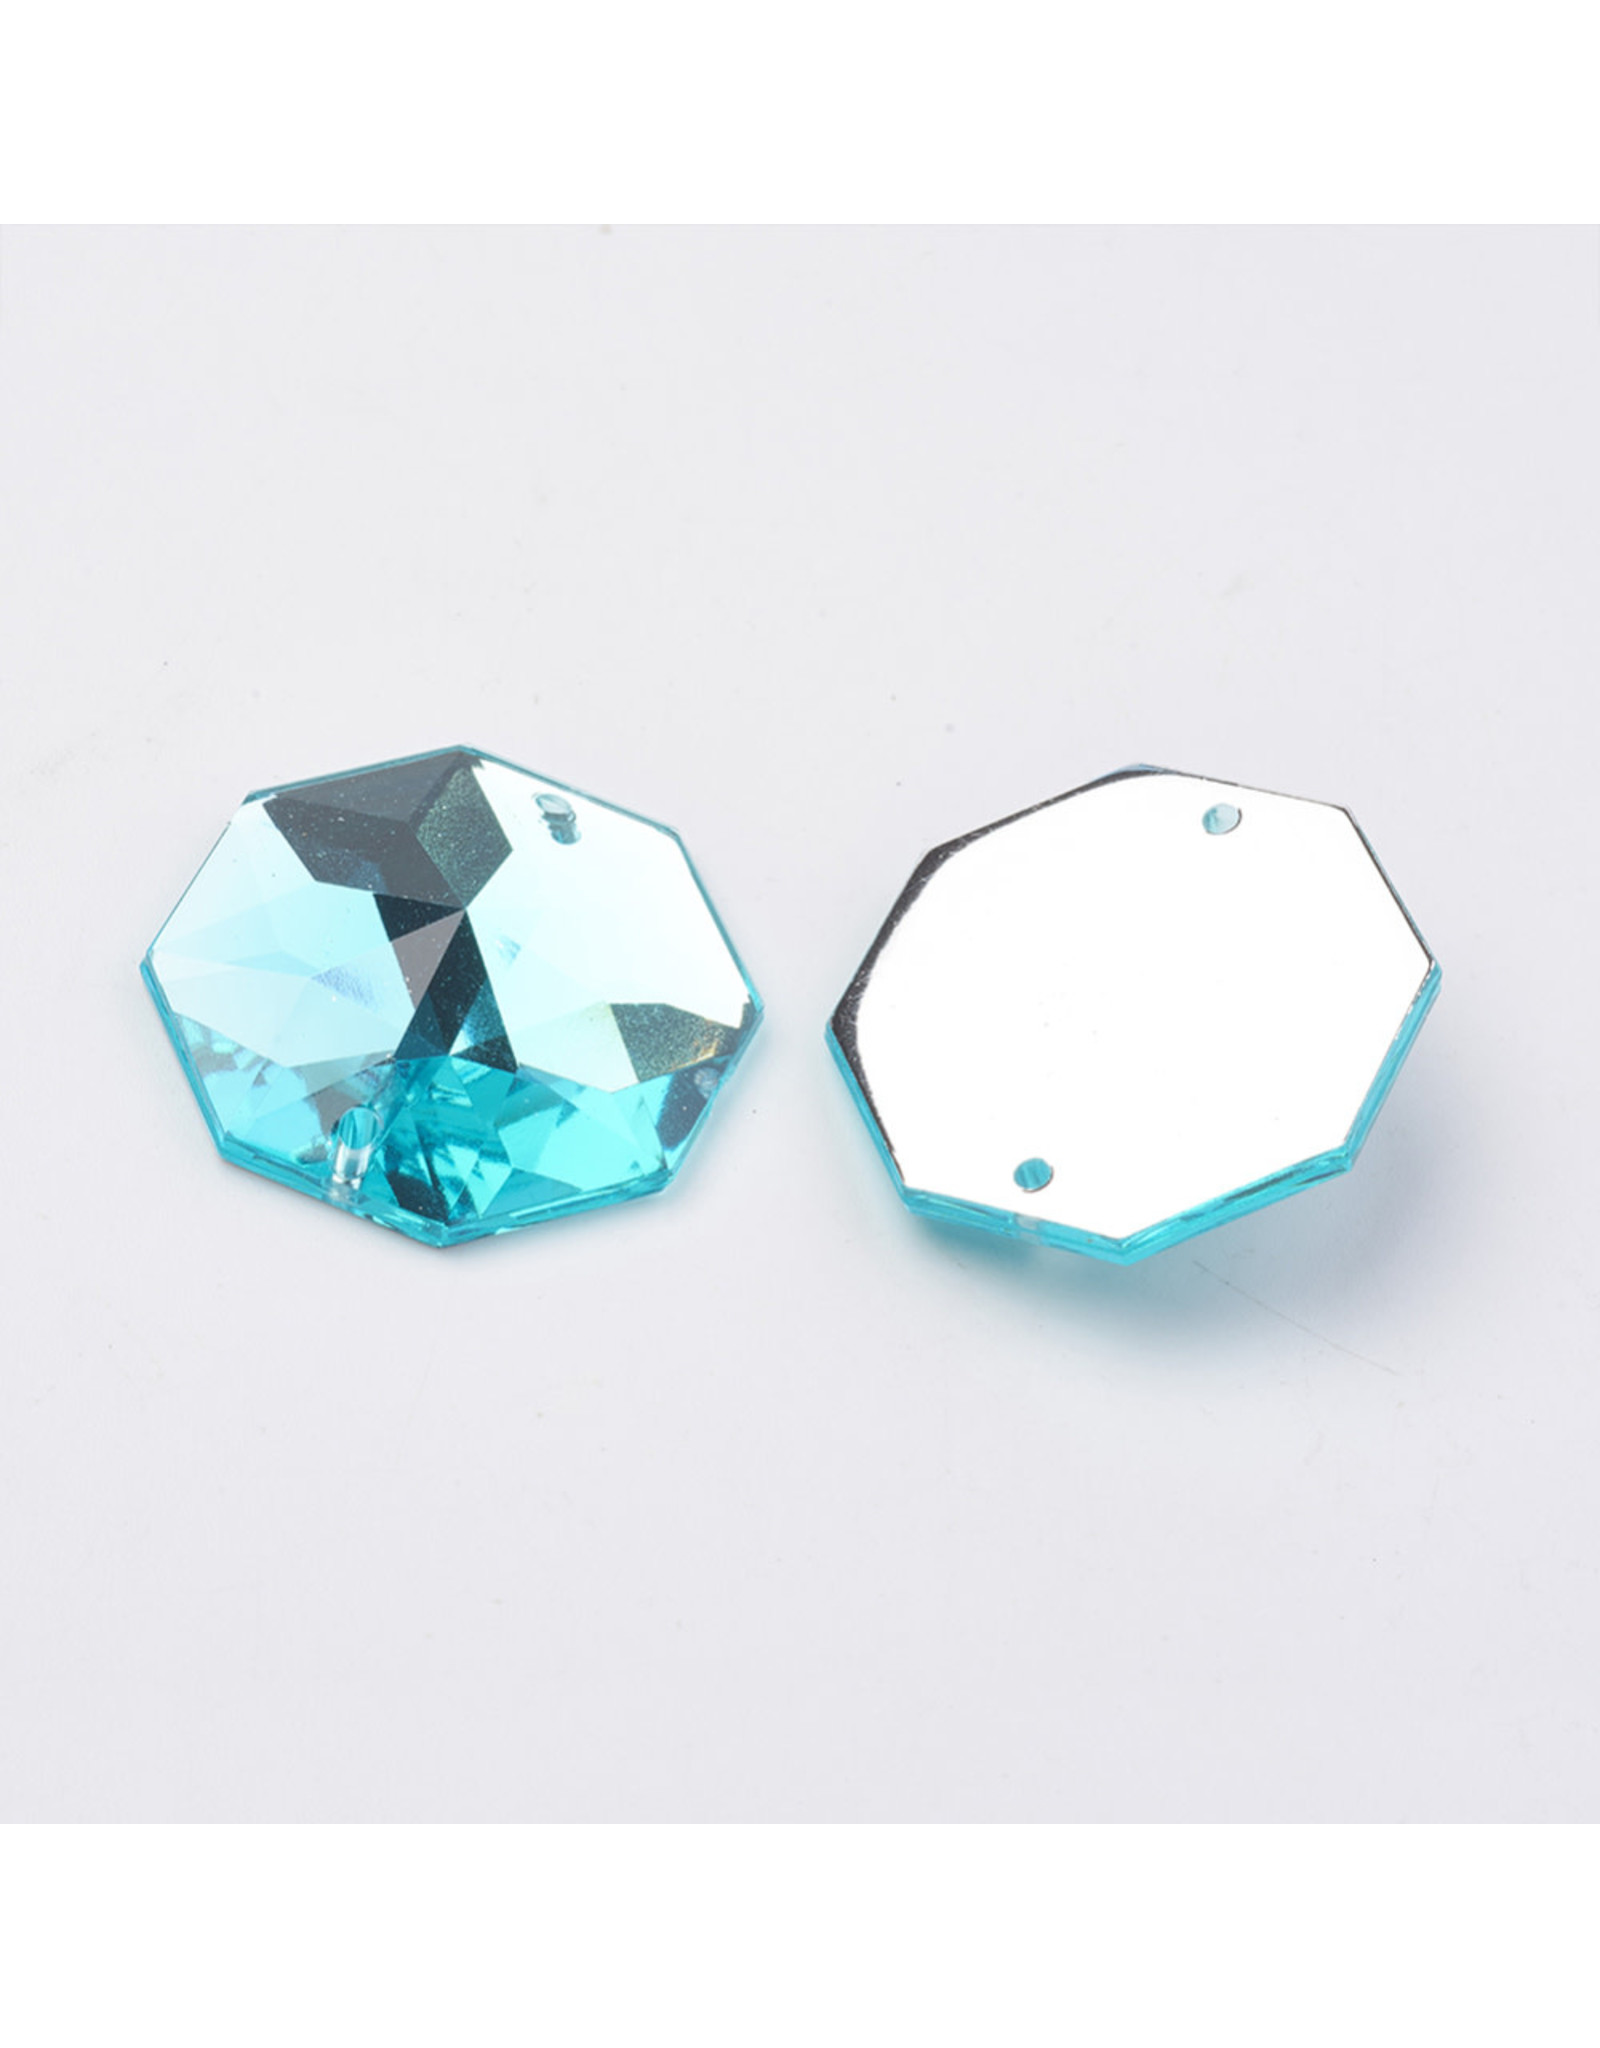 Octagon Acrylic Cabochon 25mm Light Blue  x2